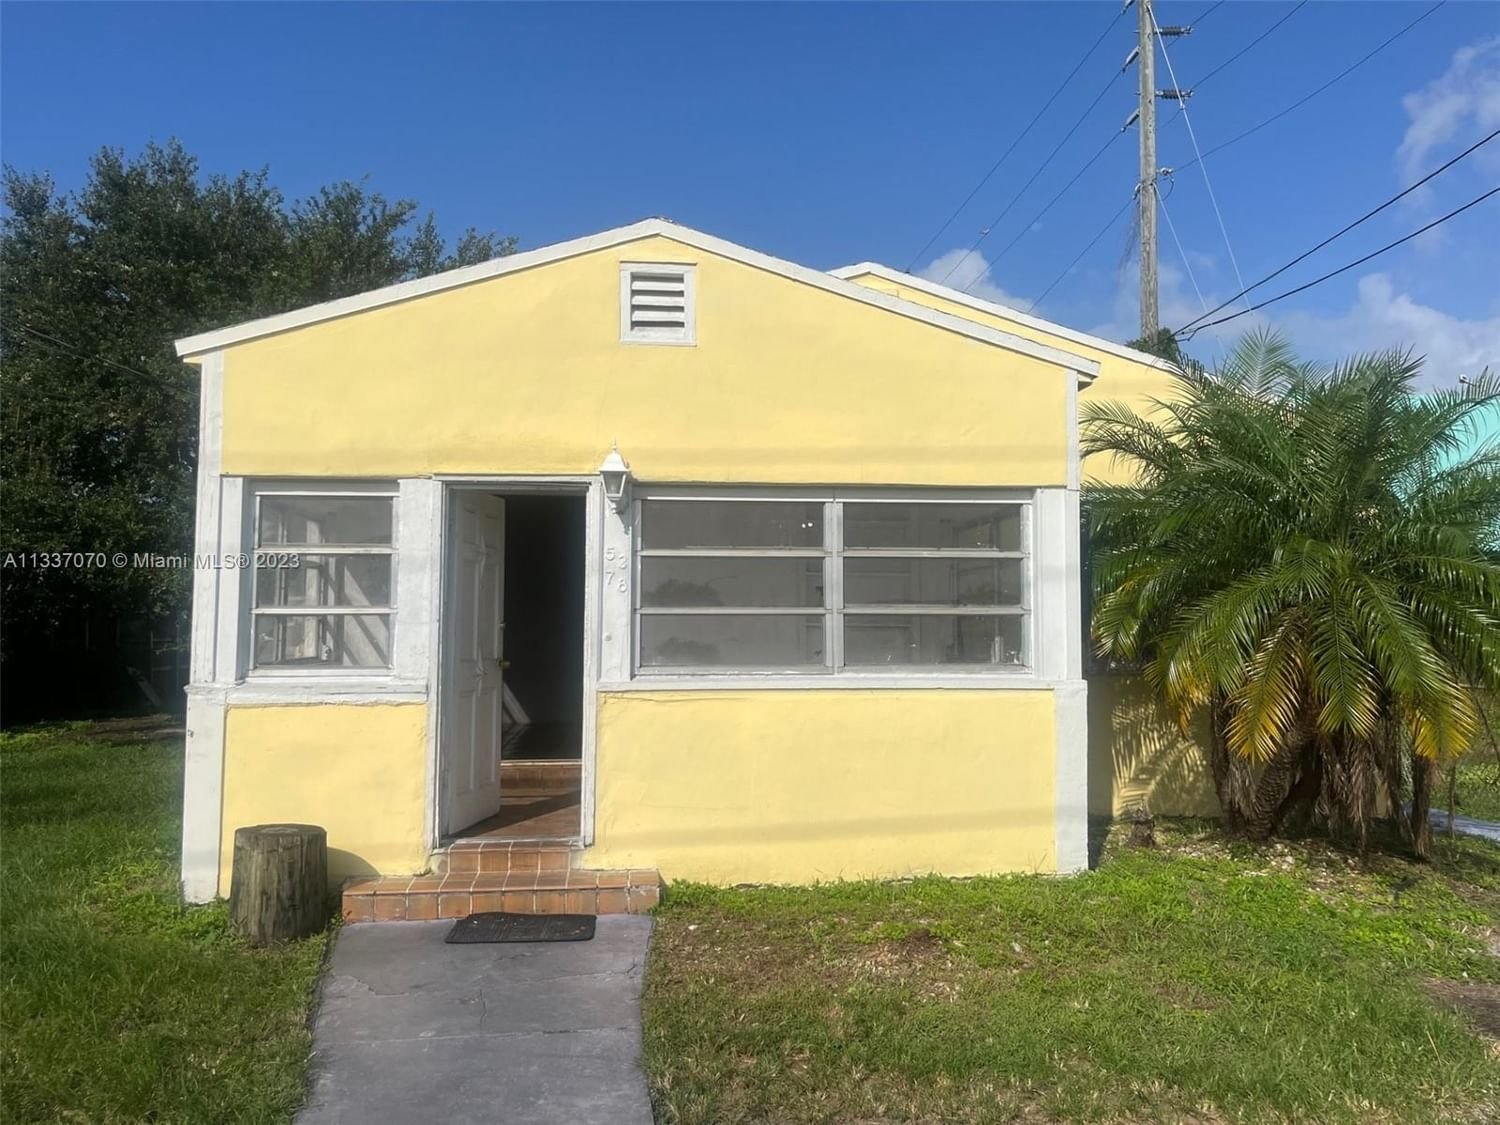 Real estate property located at 5378 29th Ave, Miami-Dade County, Miami, FL